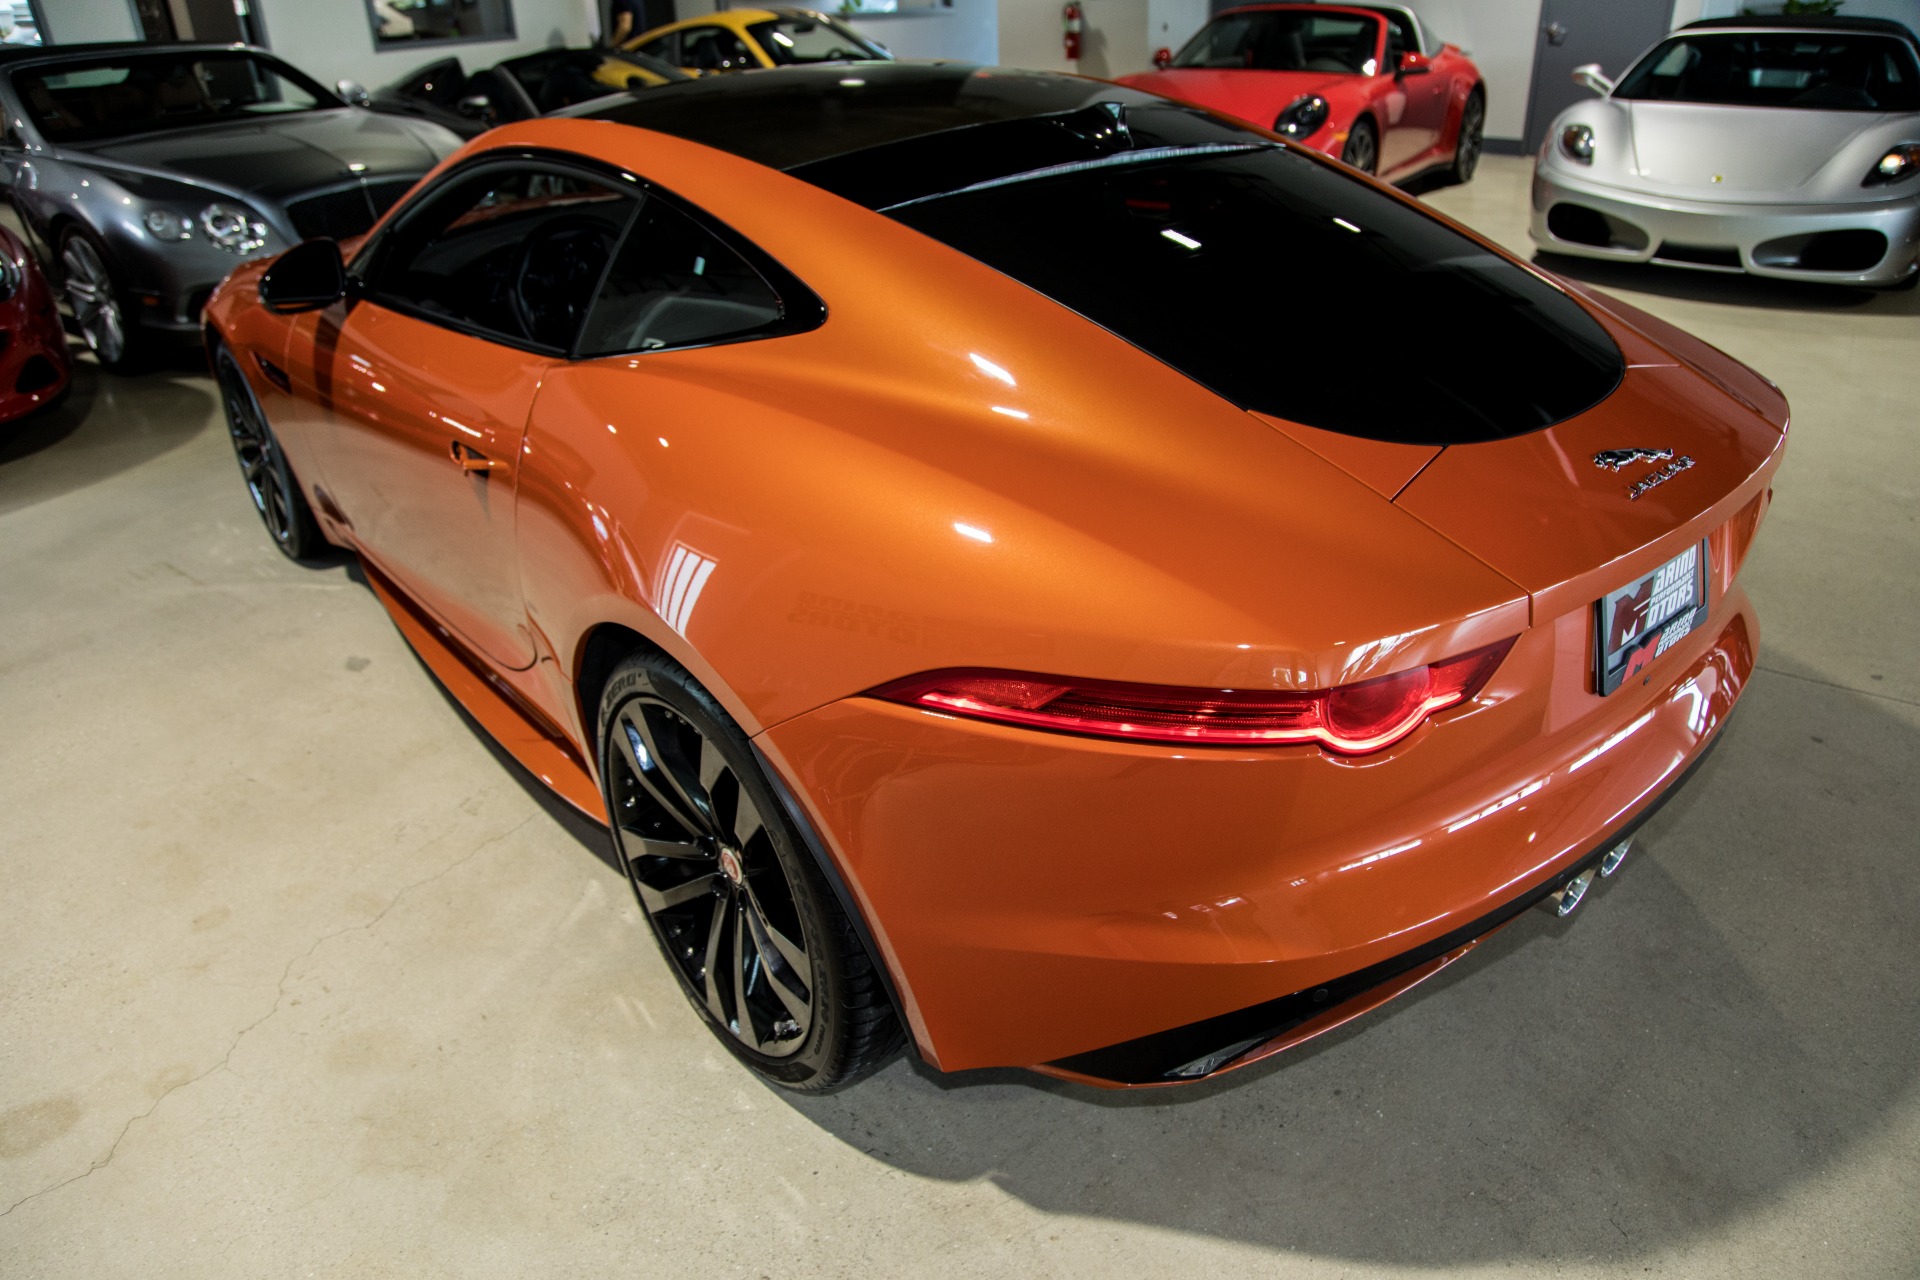 Used 2016 Jaguar F-TYPE S For Sale ($54,900) | Marino ...